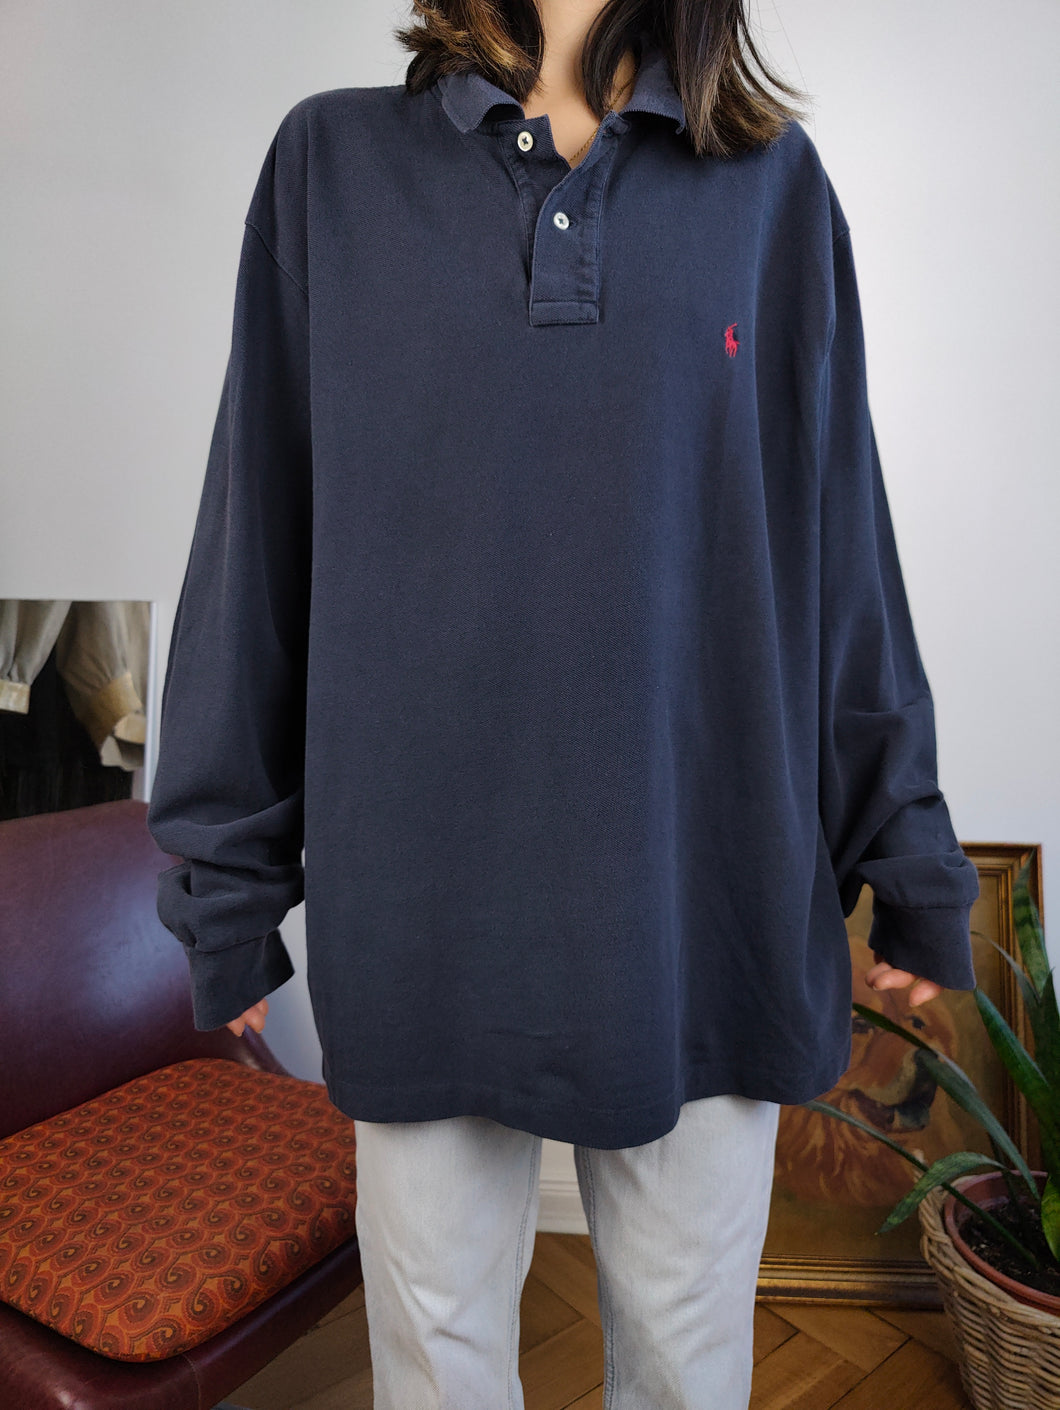 Vintage Ralph Lauren navy blue long sleeve polo shirt cotton sweater unisex men XL